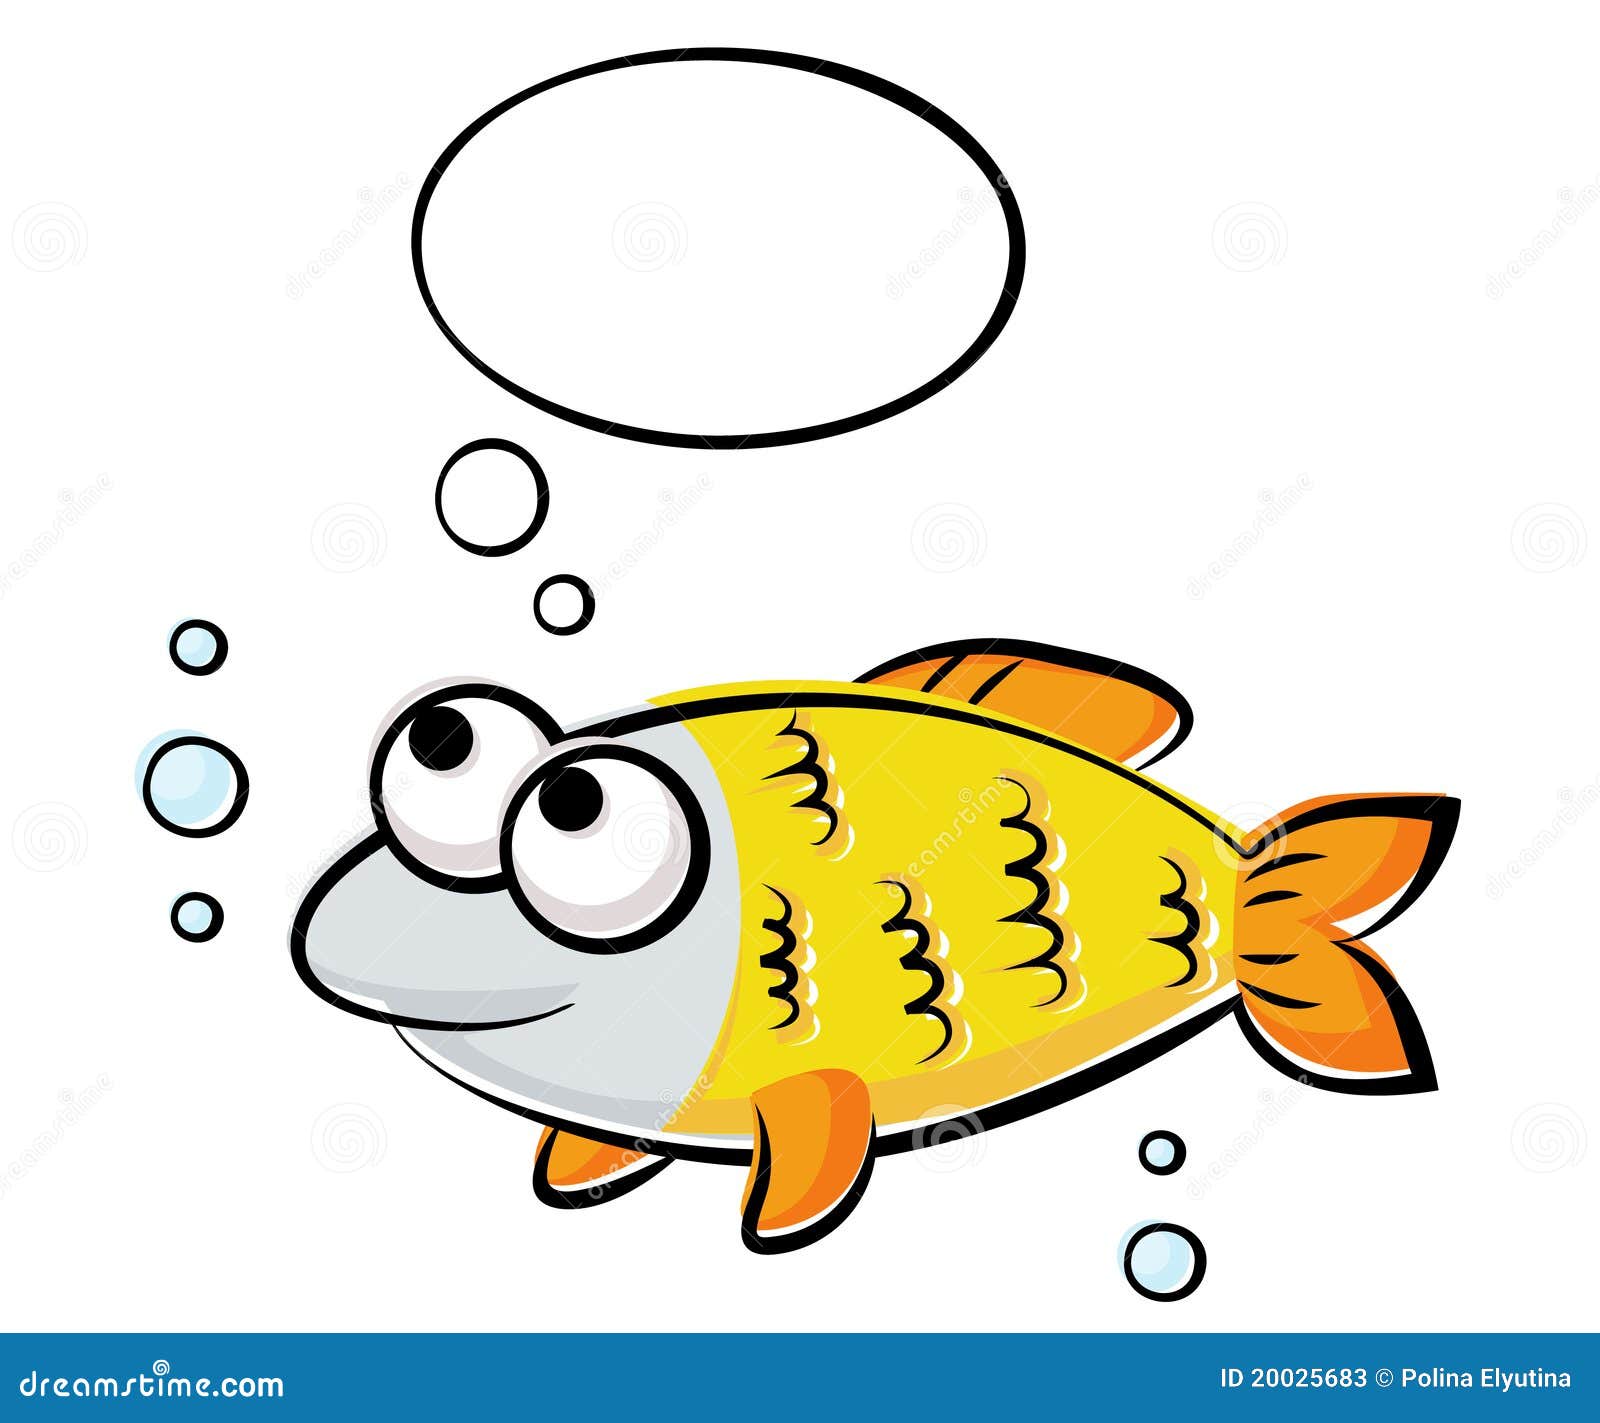 clip art funny fish - photo #49